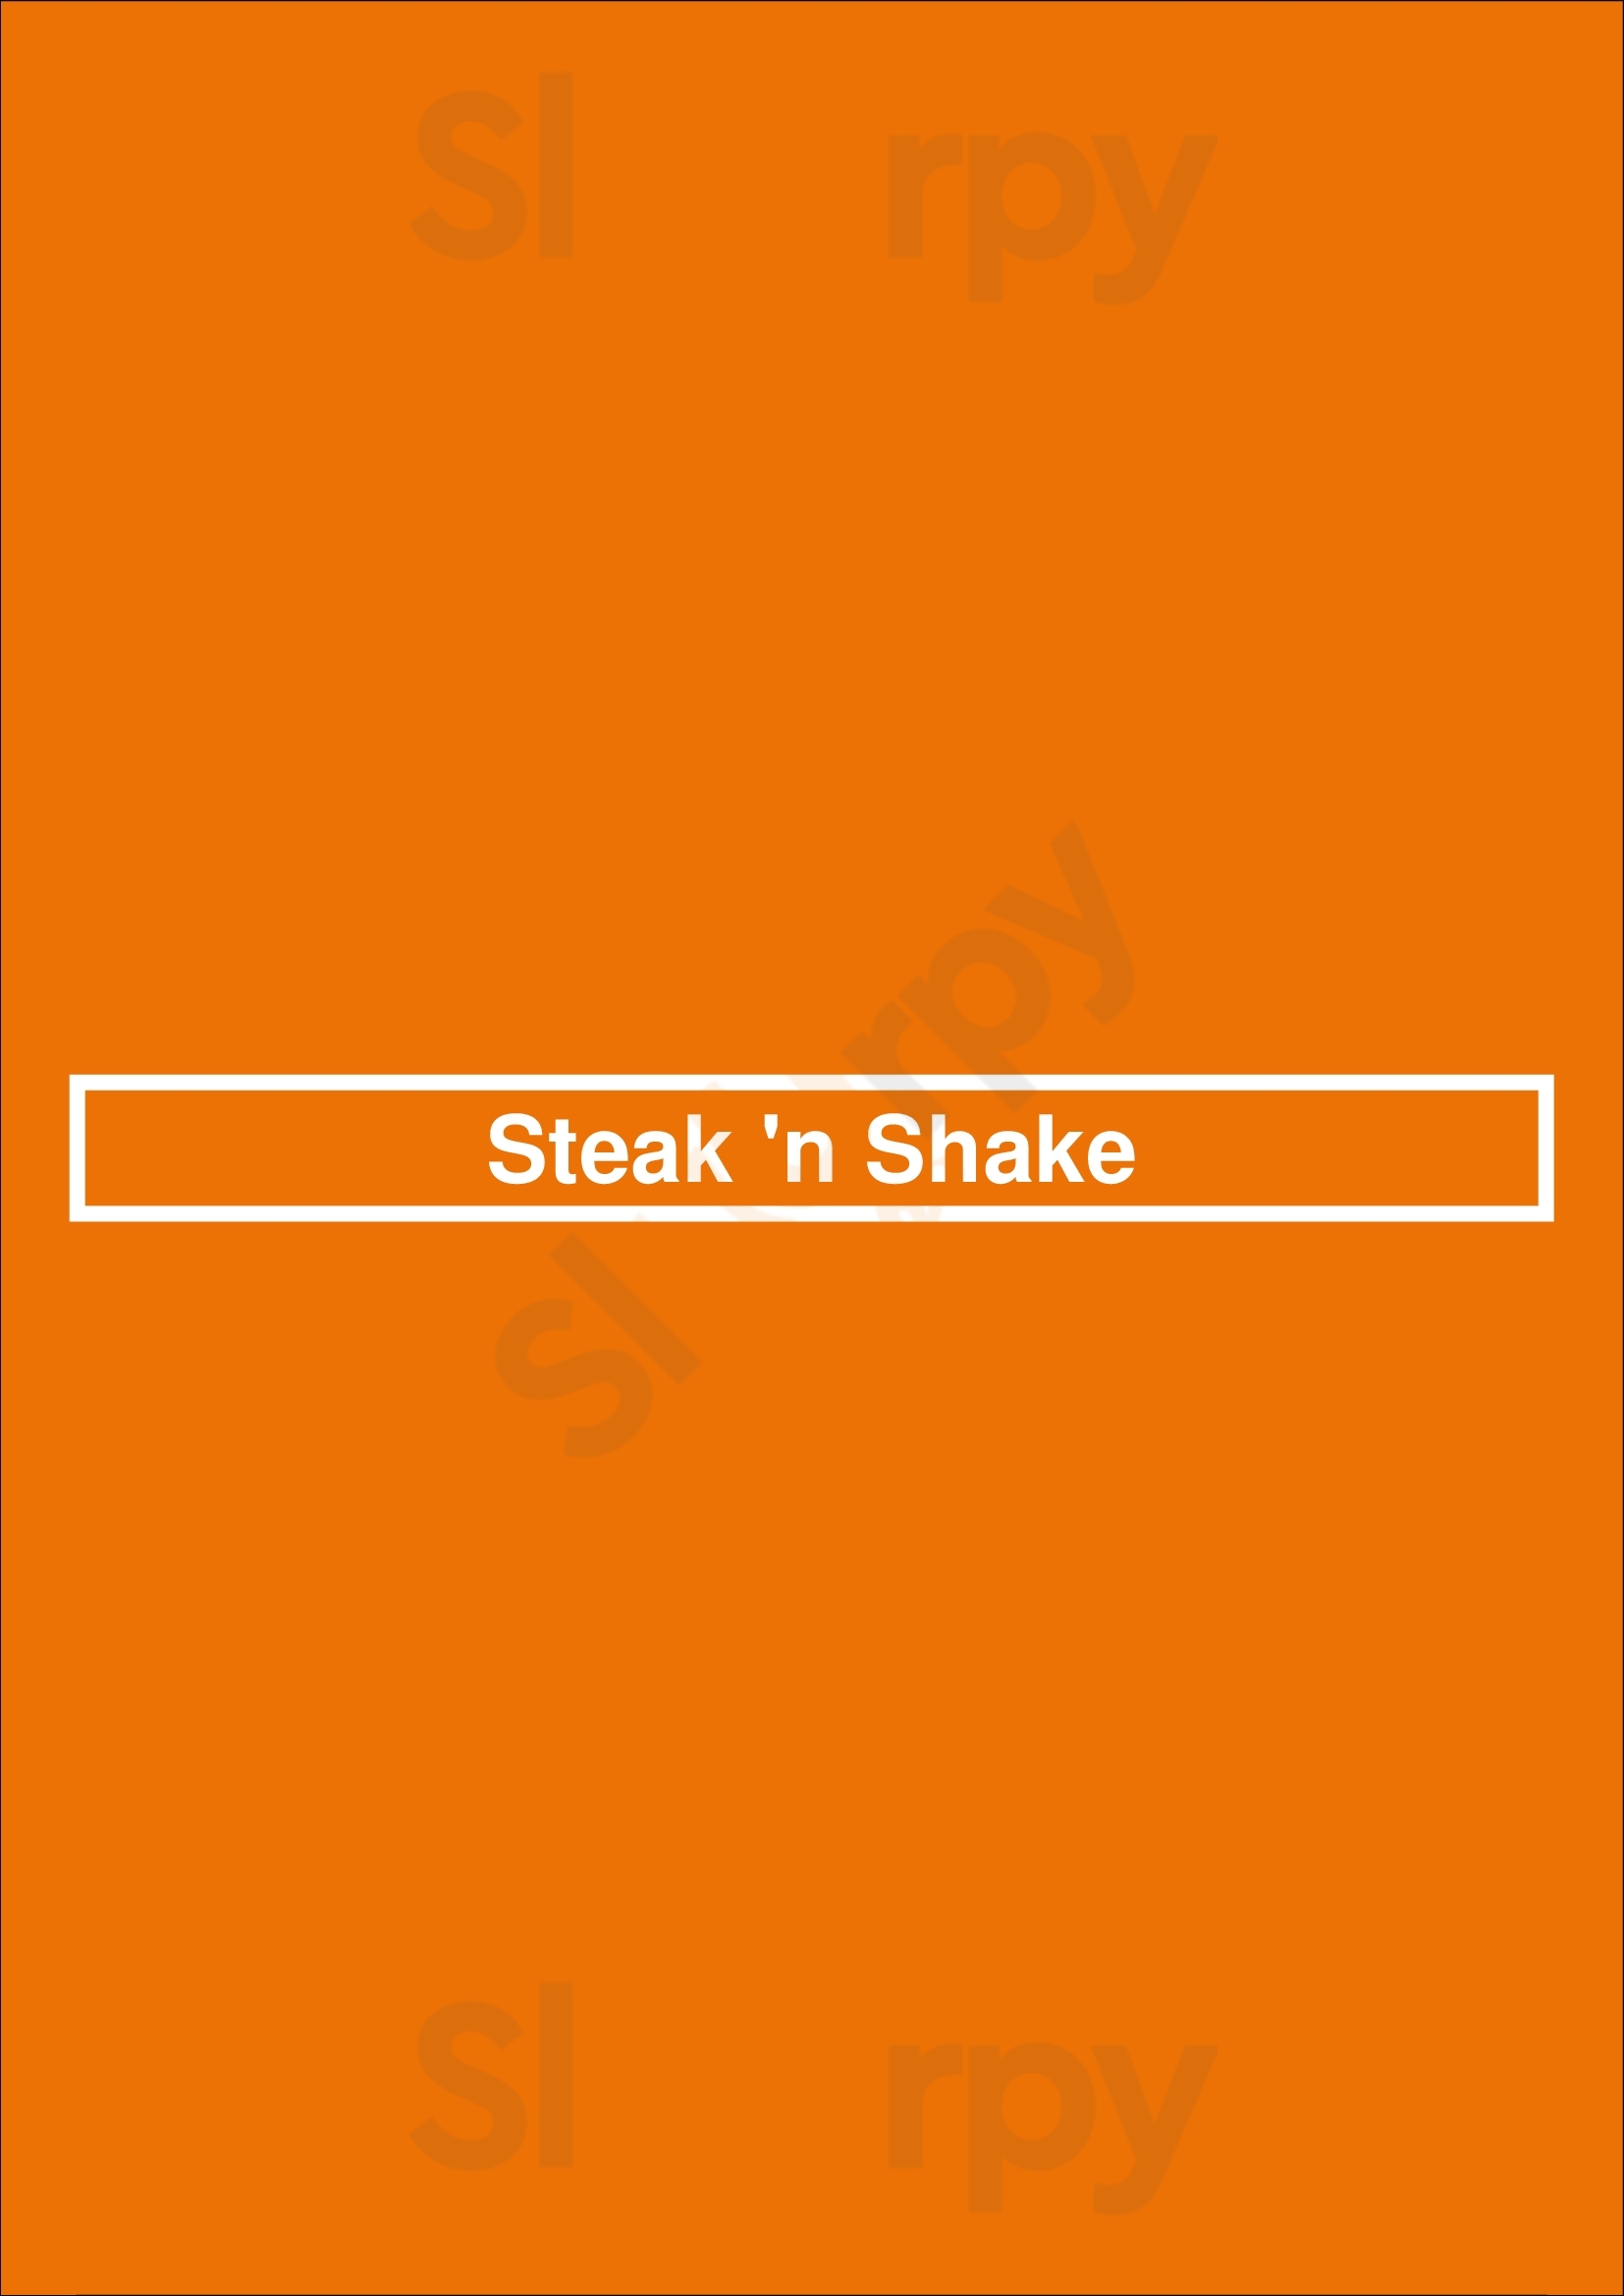 Steak 'n Shake Indianapolis Menu - 1